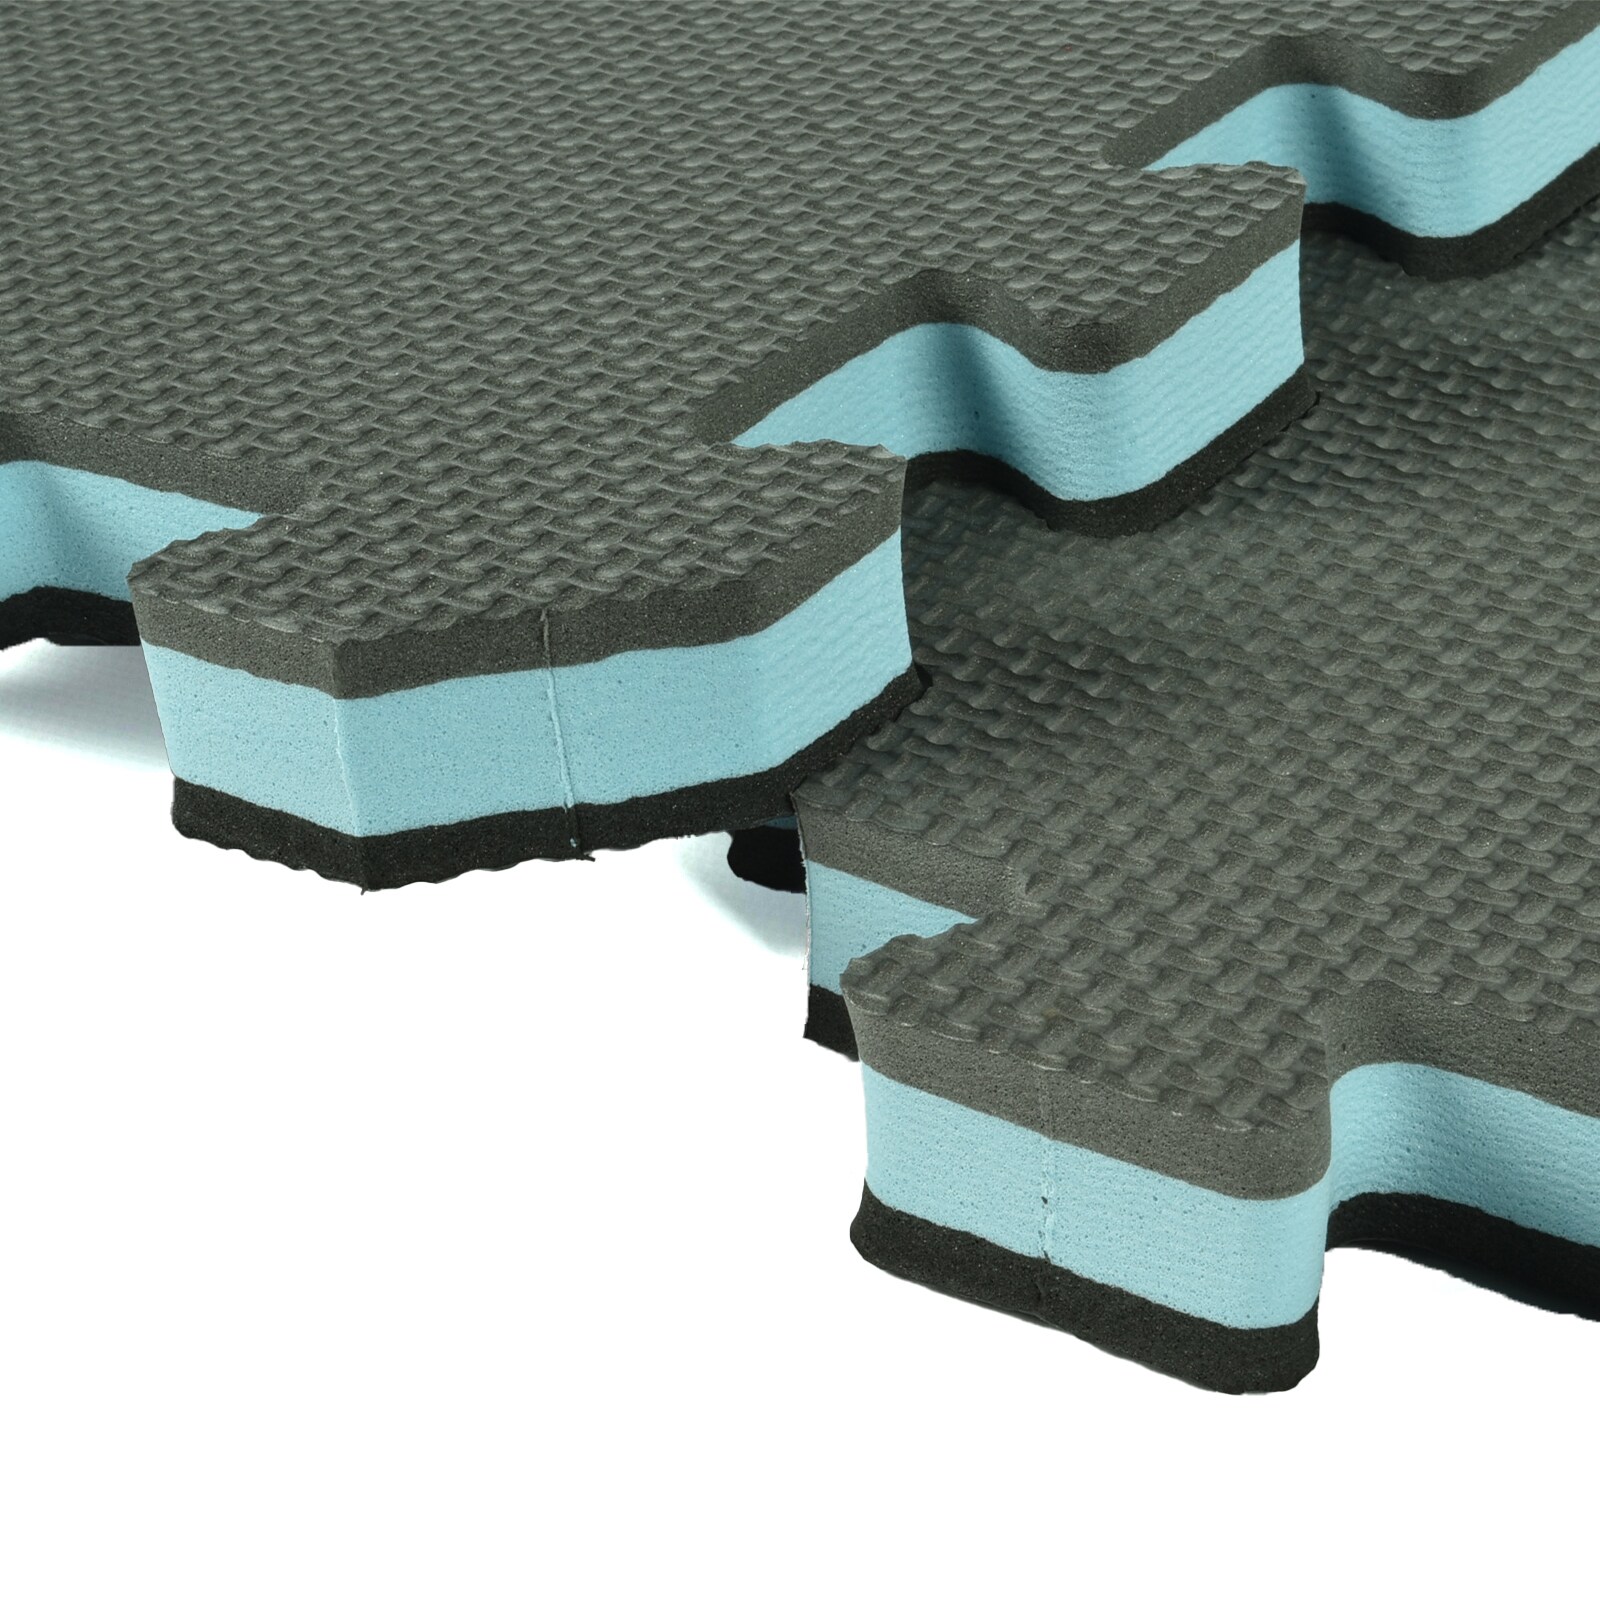 Norsk Truly Reversible Sport Foam Floor Mat Sample Tiles